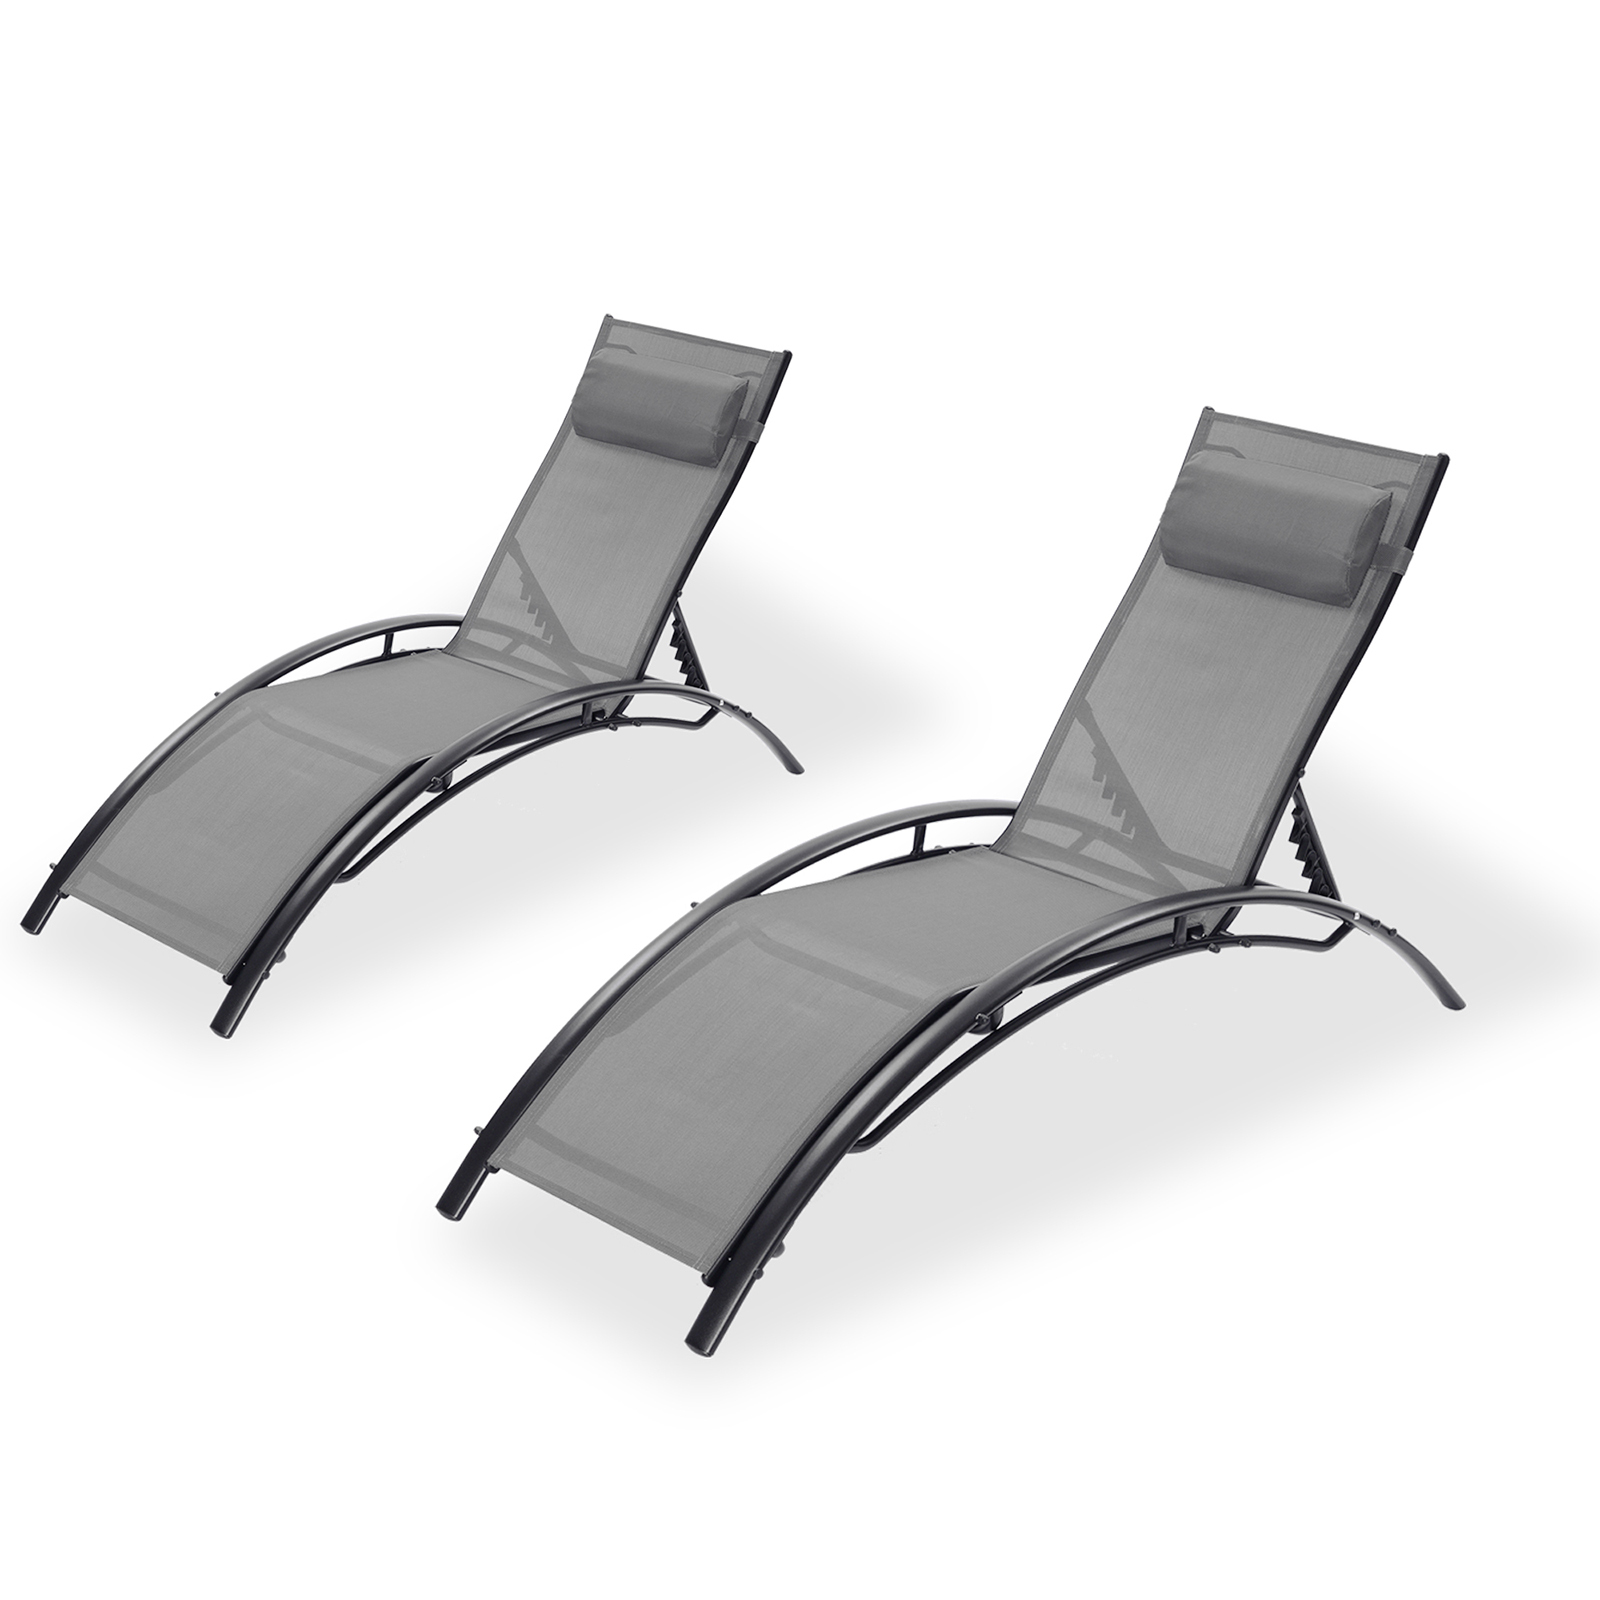 Hassch 2PCS Outdoor Chaise Lounges Aluminum Recliner Chair Beach Sun Chair, Gray - image 1 of 10